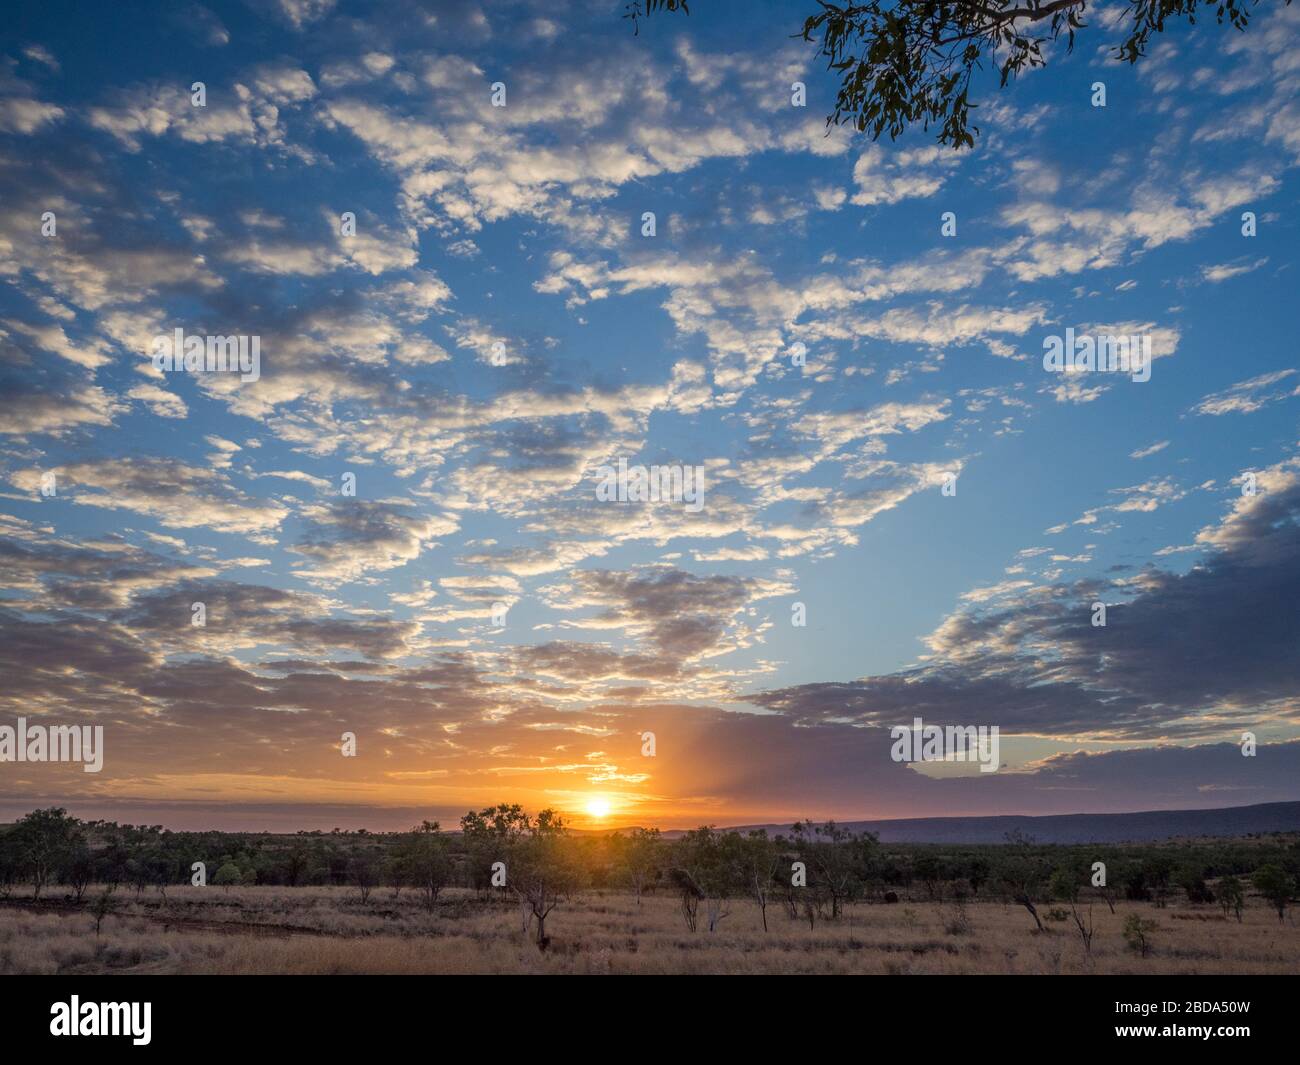 Savannah sunrise, Mornington, The Kimberley, Western Australia Stock Photo